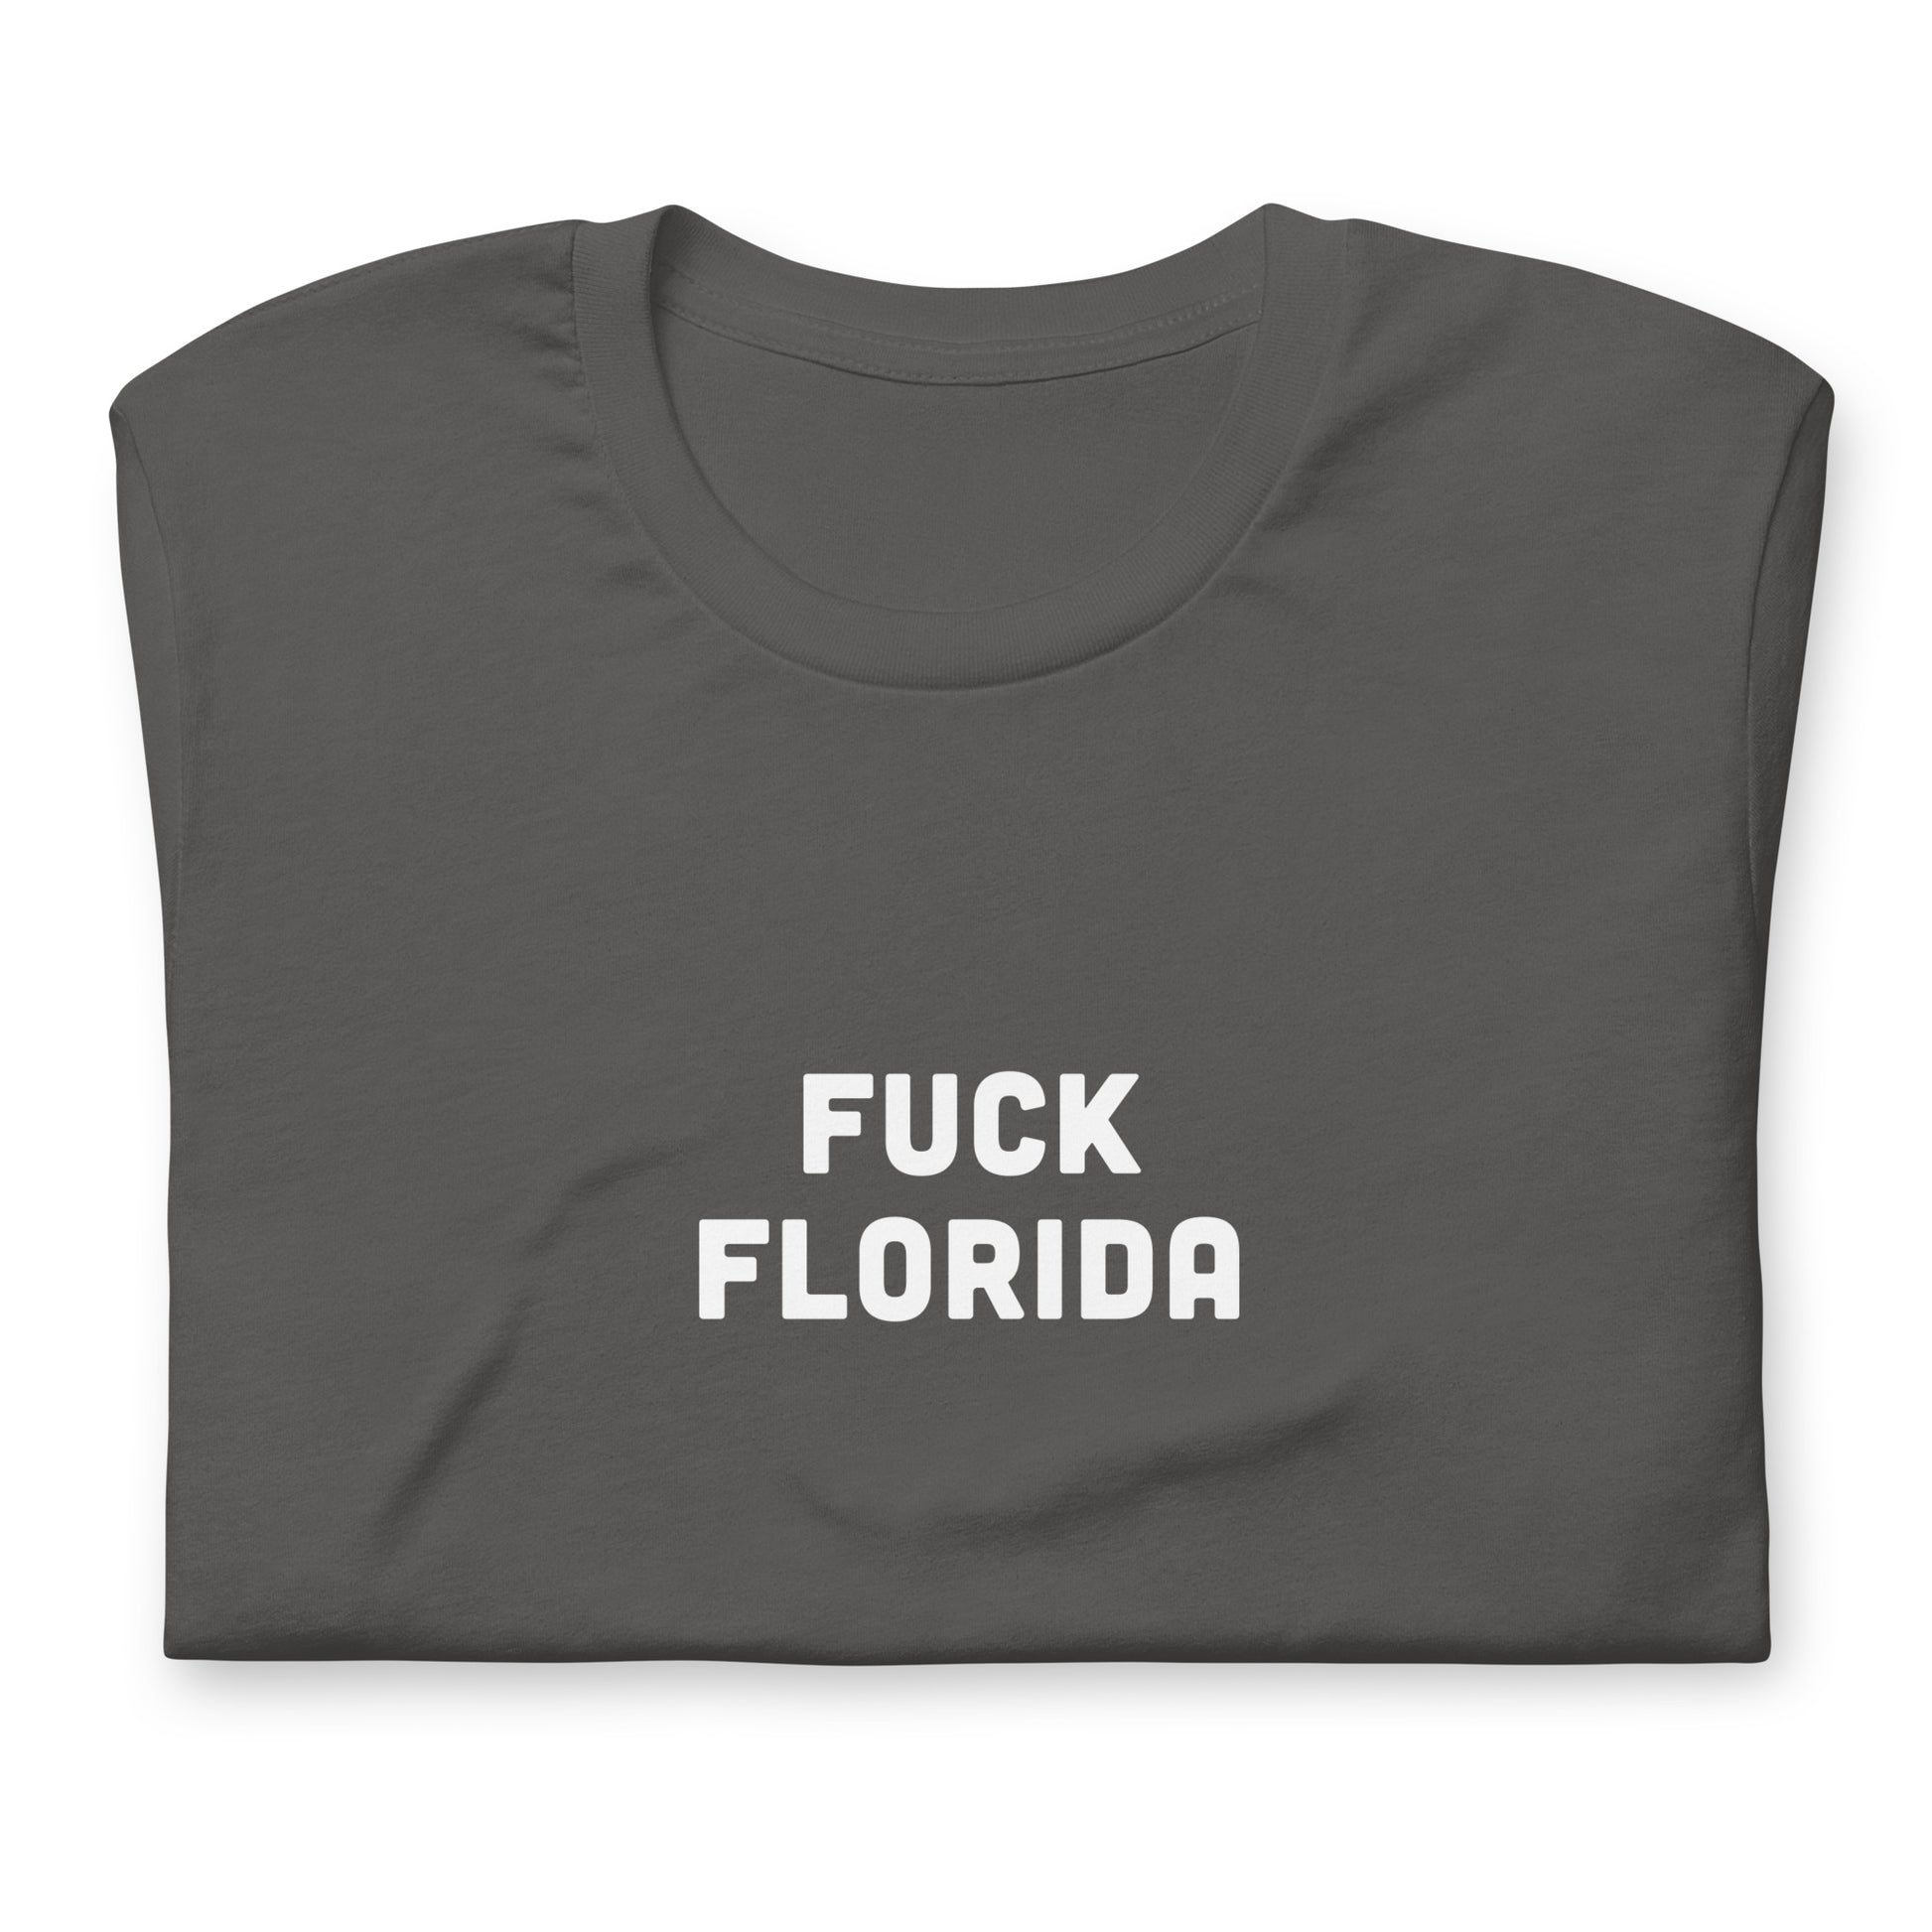 Fuck Florida T-Shirt Size 2XL Color Black